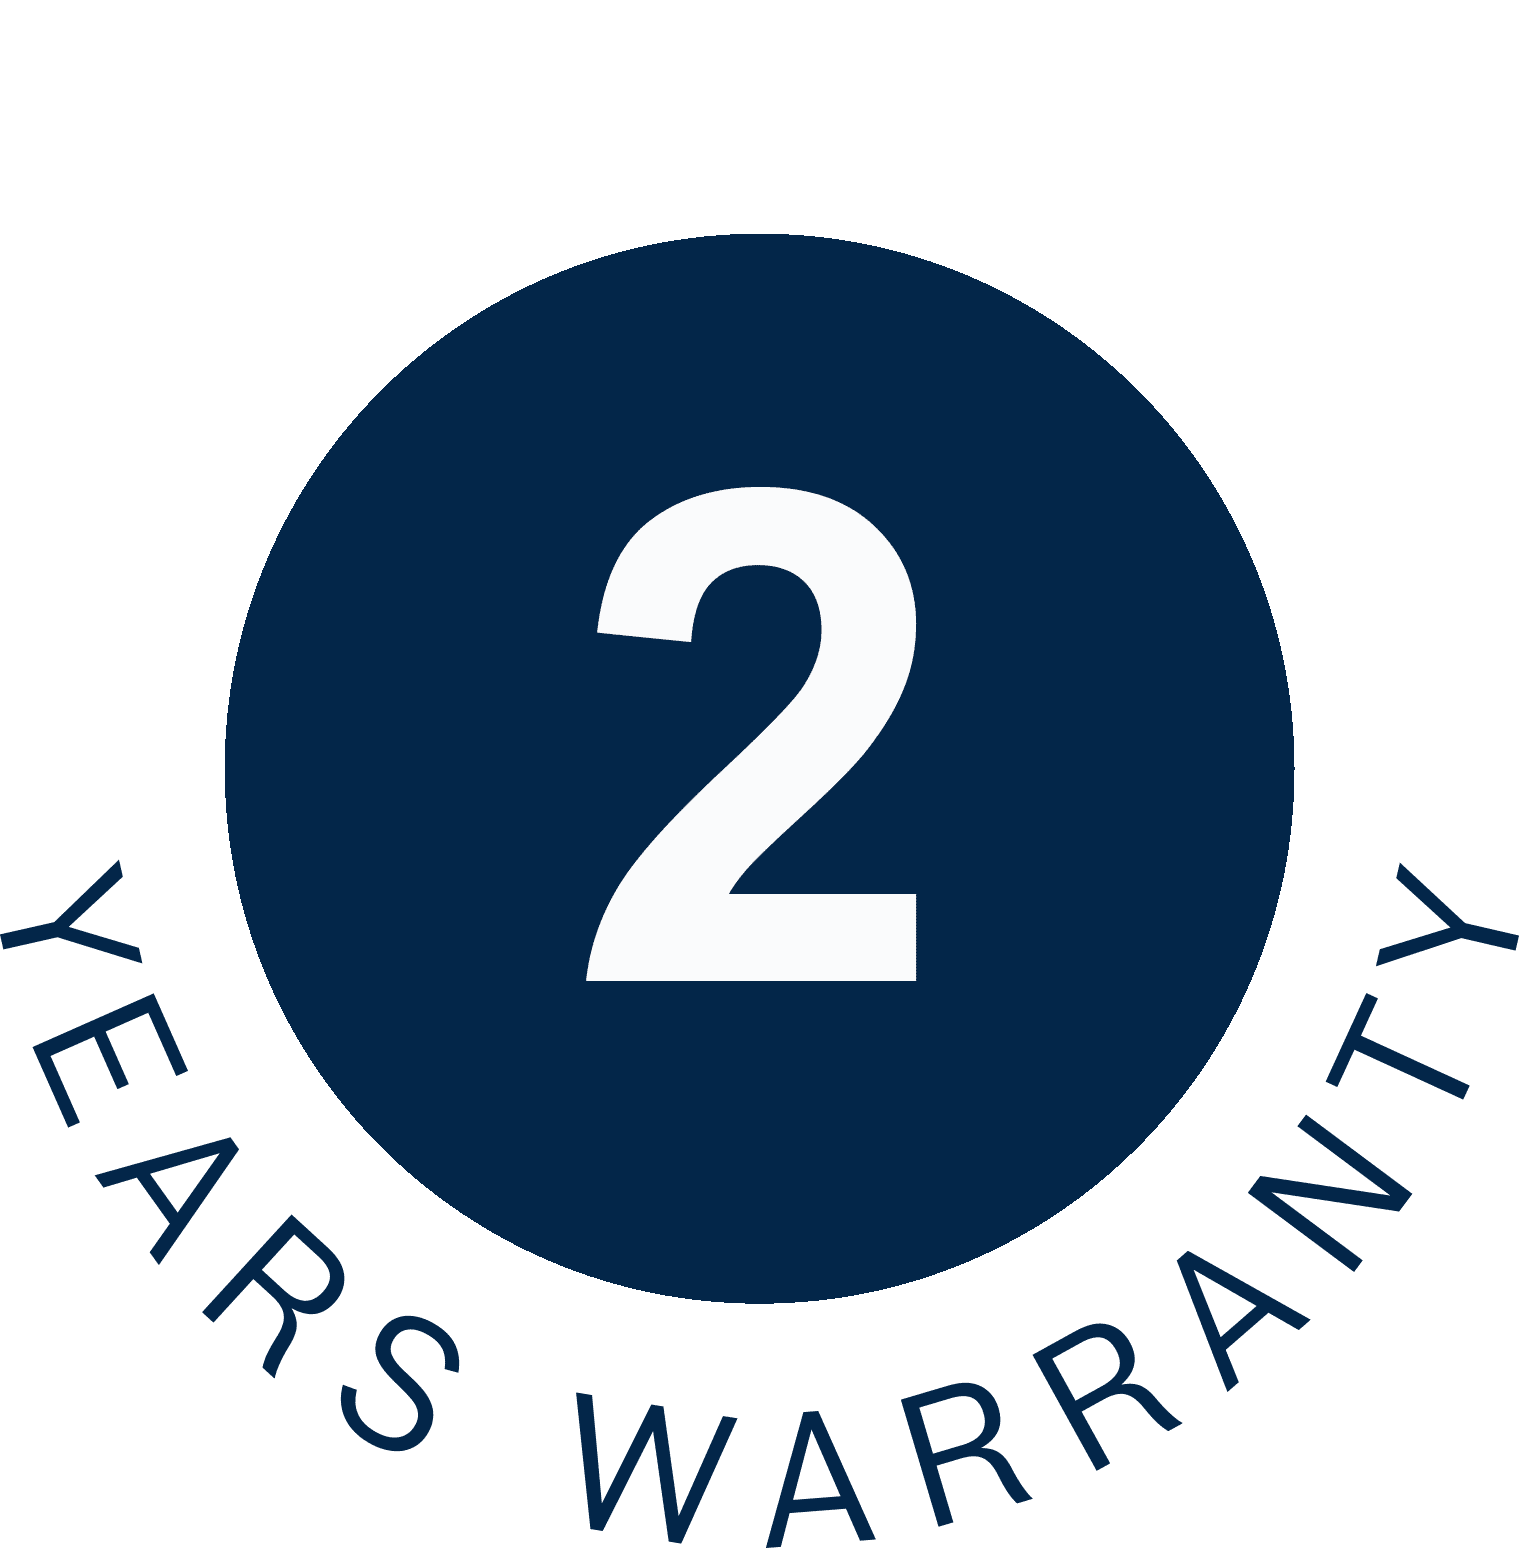 2 Years Manufacturer’s Warranty